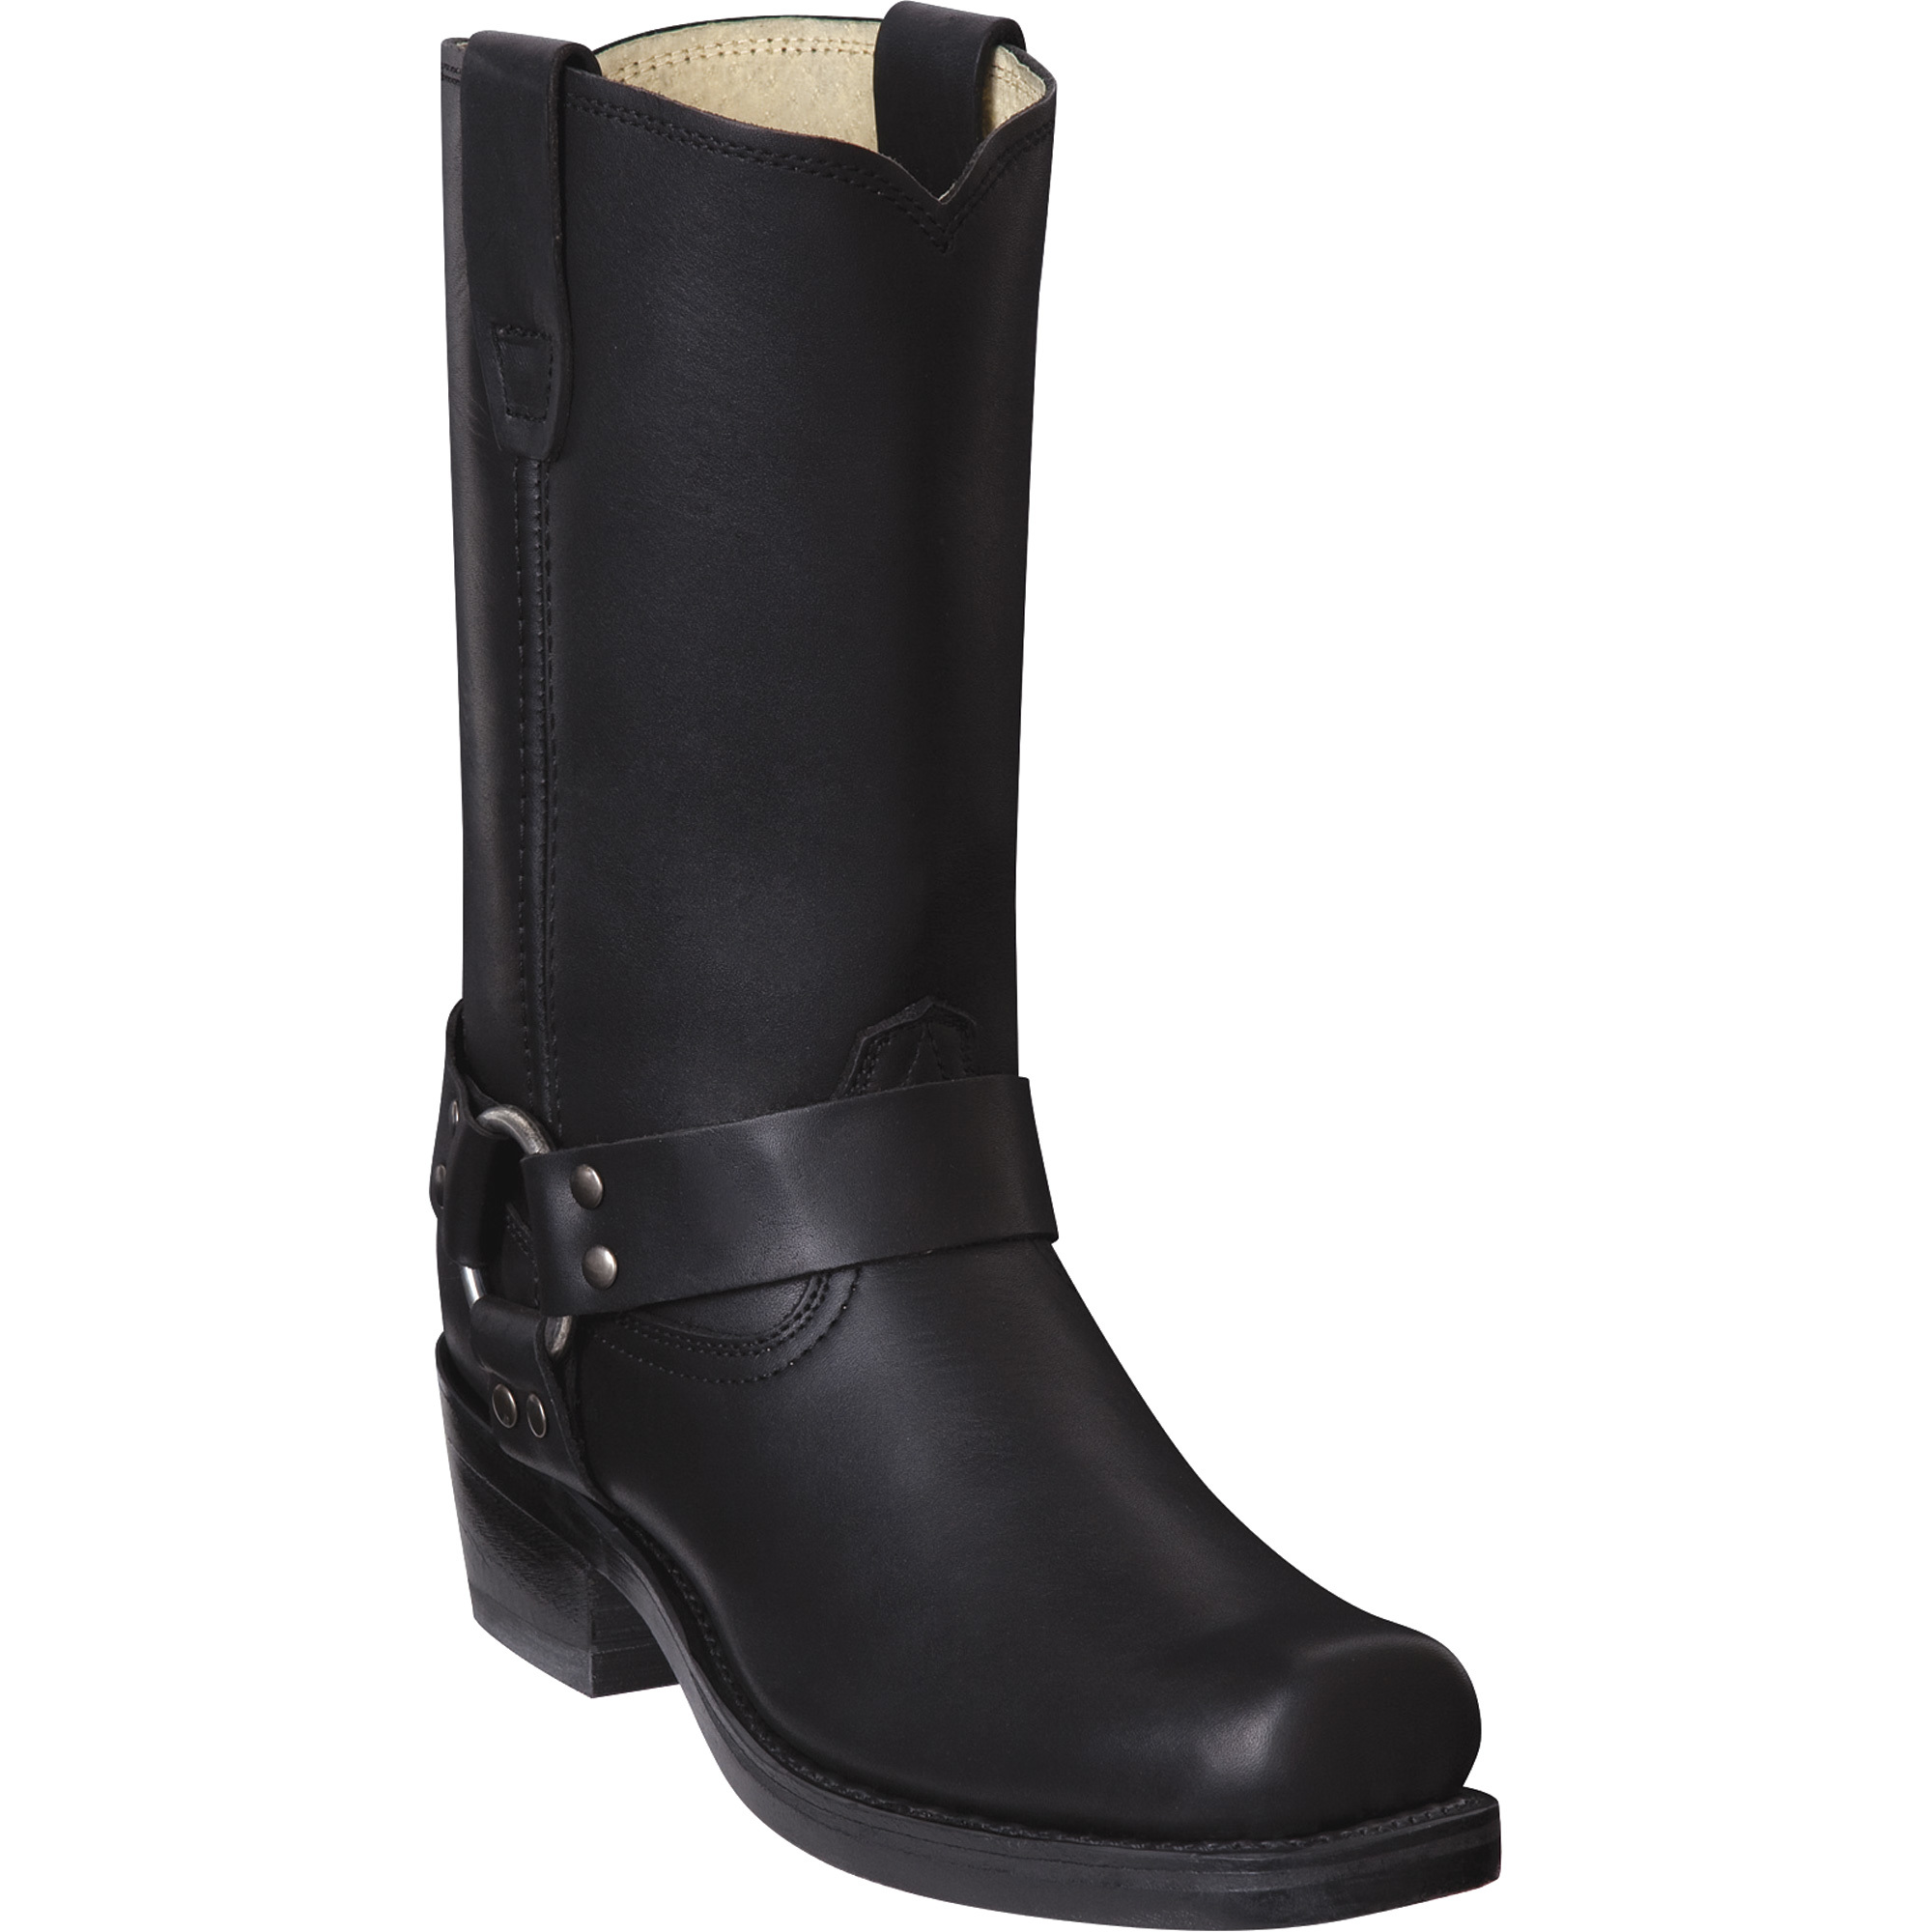 Durango Men's 11Inch Harness Boot - Black, Size 12 Wide, Model DB 510